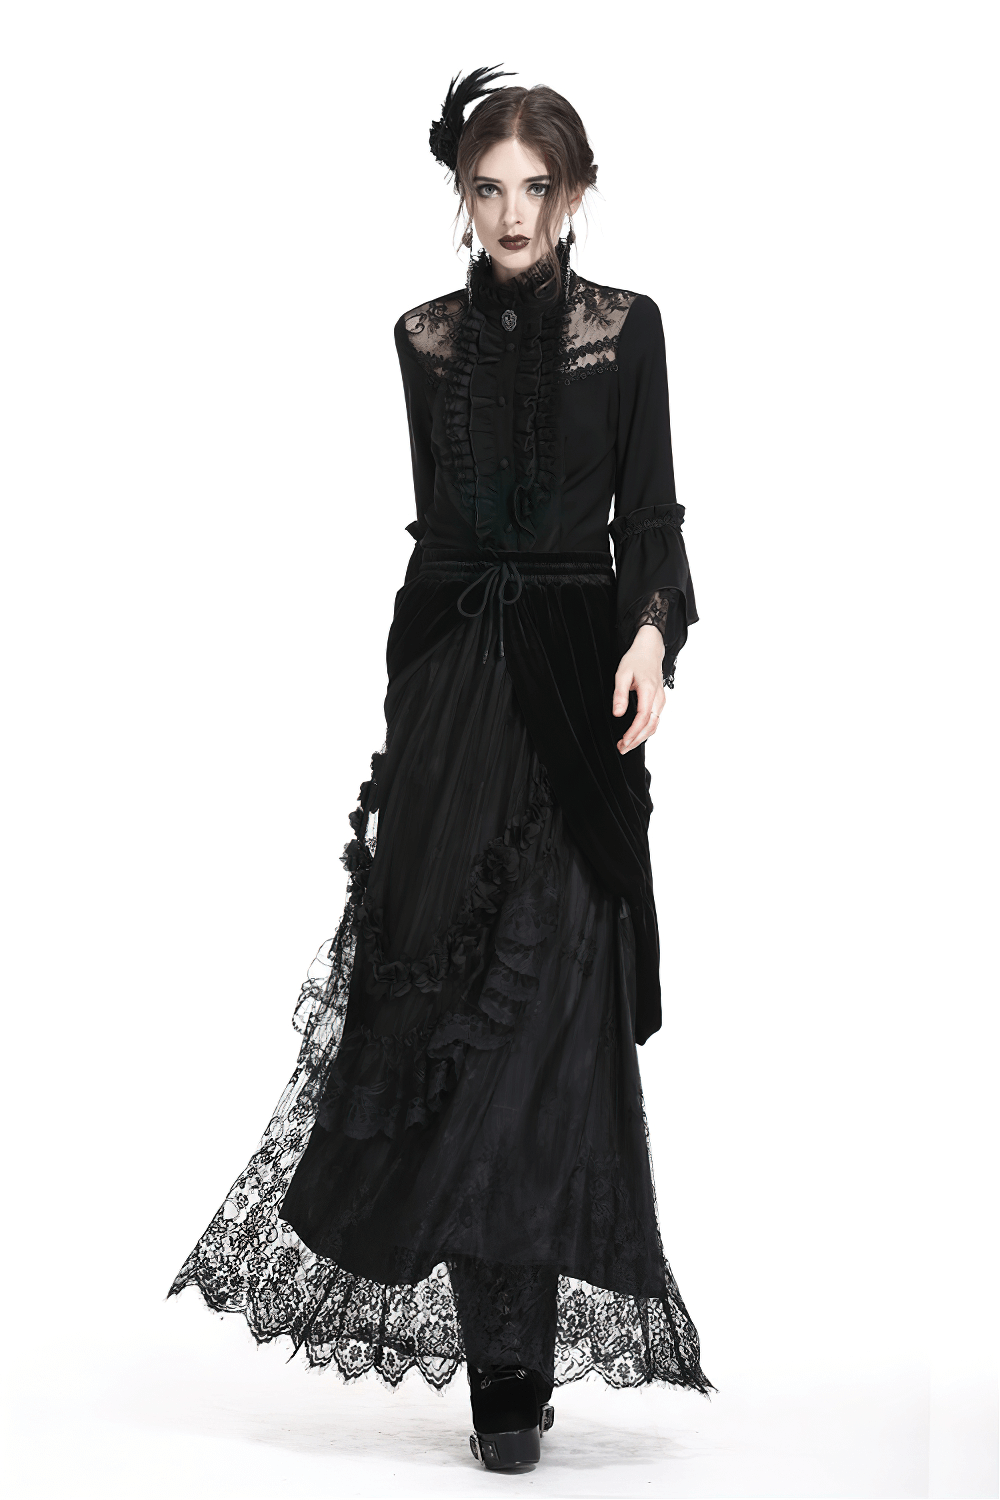 Female Velvet Gothic Maxi Skirt with Lace Trim